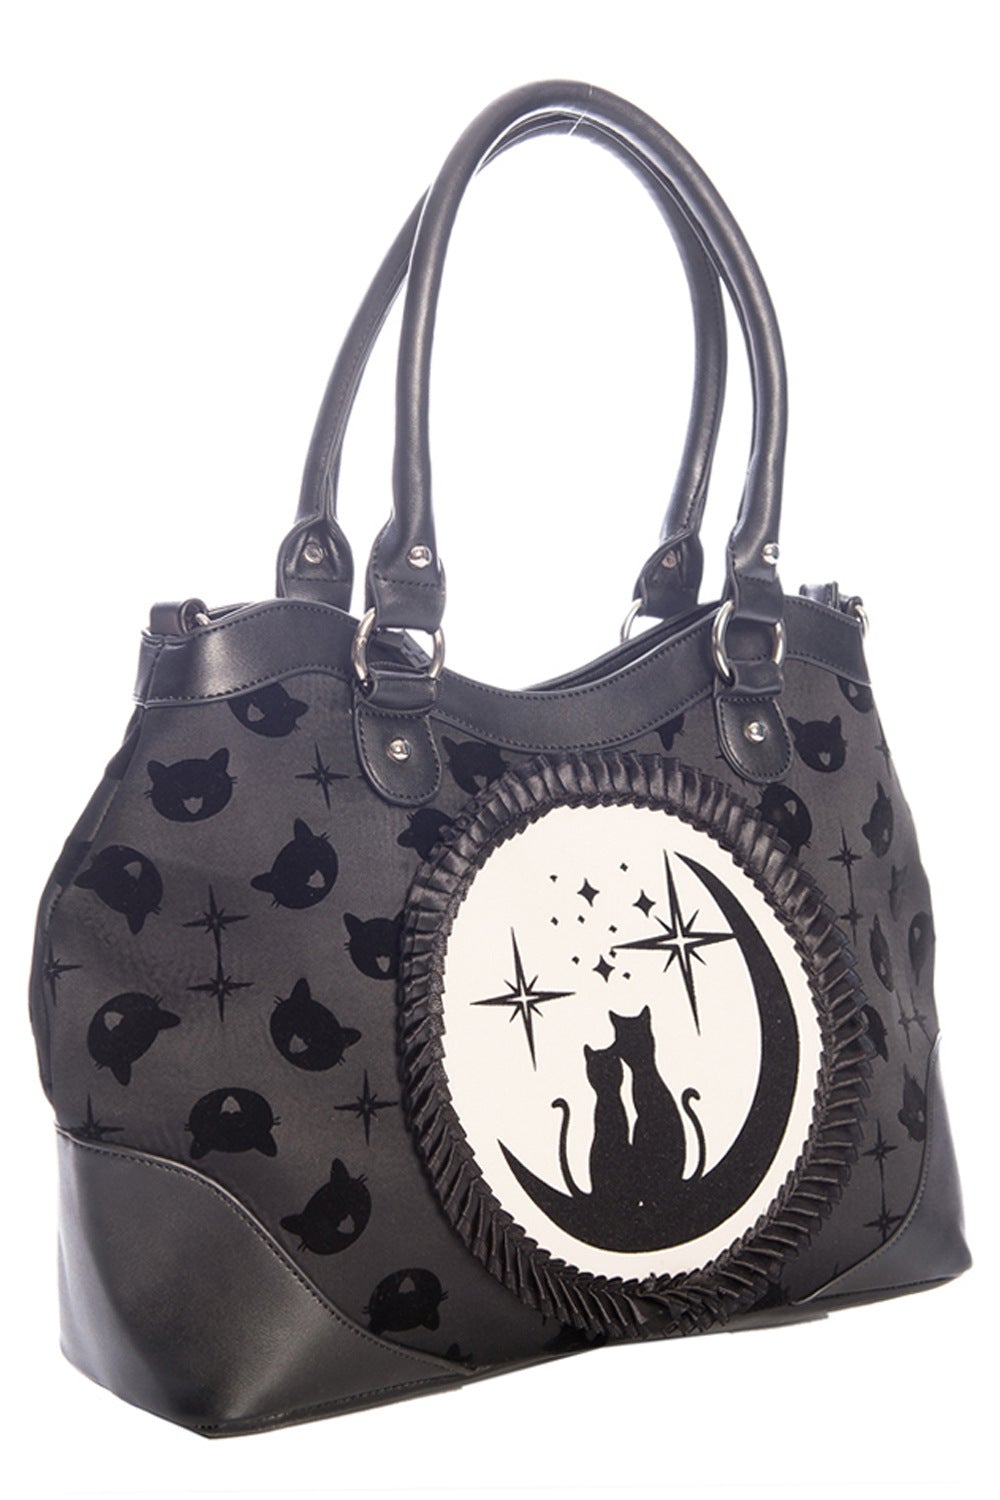 Banned Alternative Lunar Sisters Cat Bowler Handbag